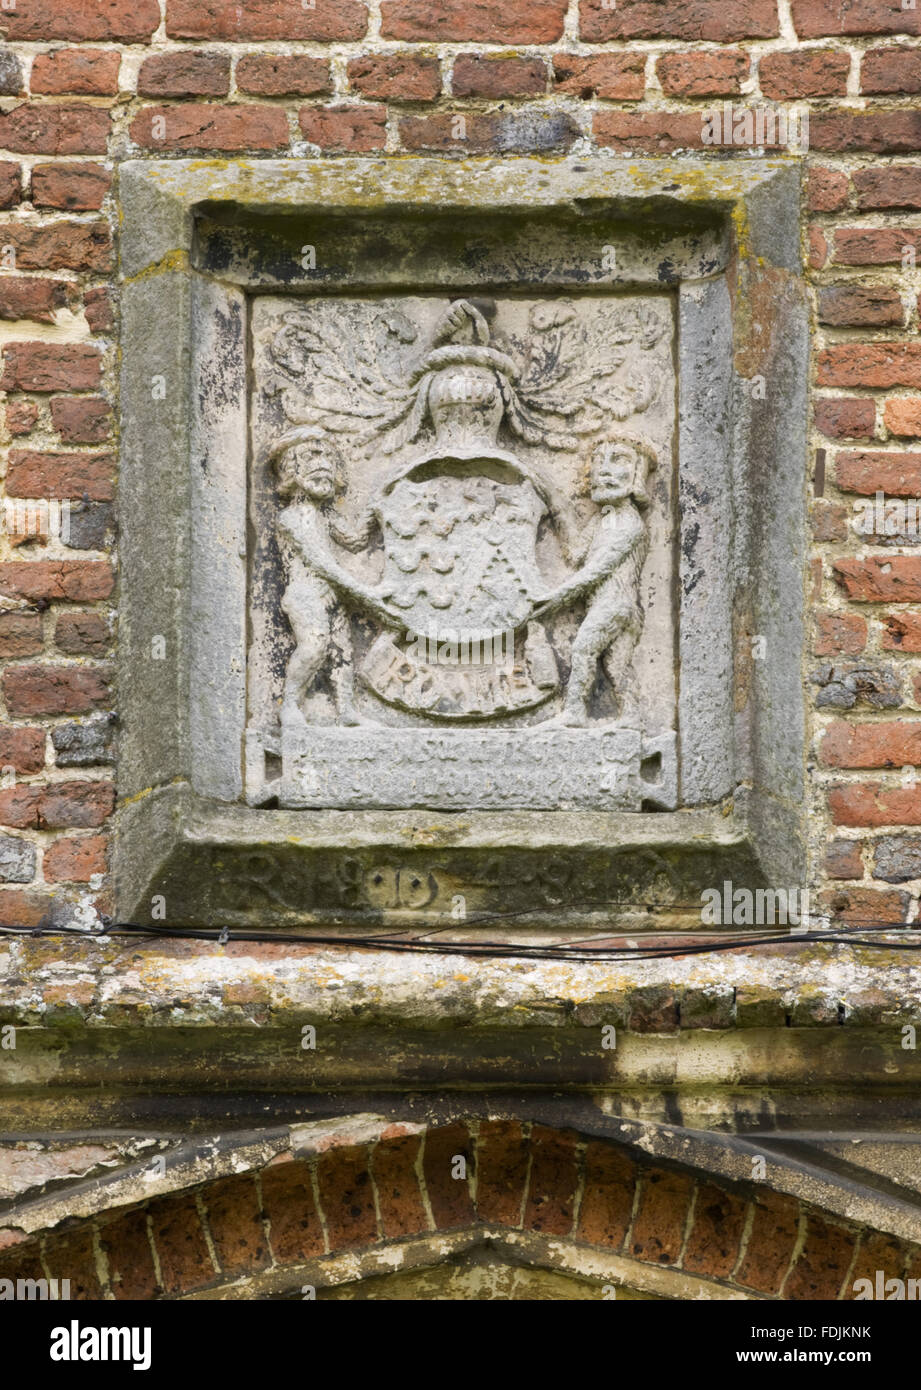 Un grupo escultórico de piedra con un escudo de armas flanqueado por figuras de operadora. Foto de stock